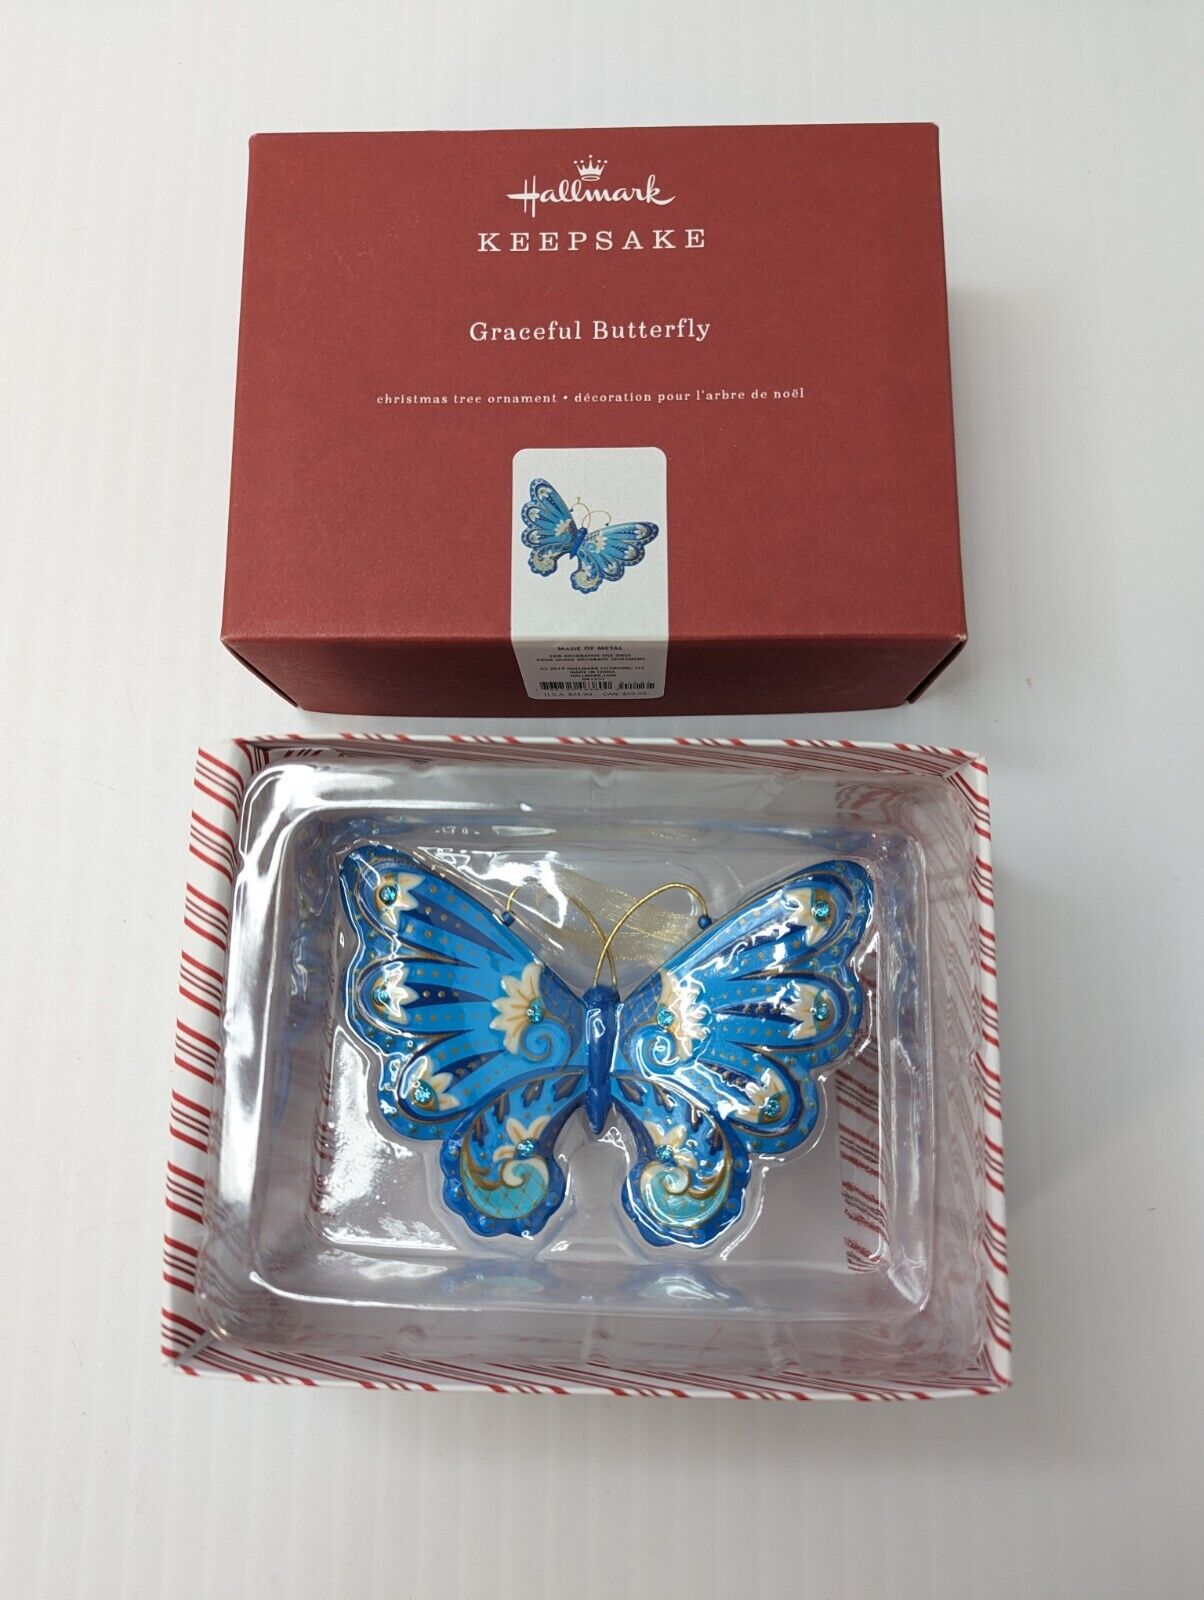 2019 Hallmark Keepsake Graceful Butterfly Premium Ornament NIB NEW IN BOX 